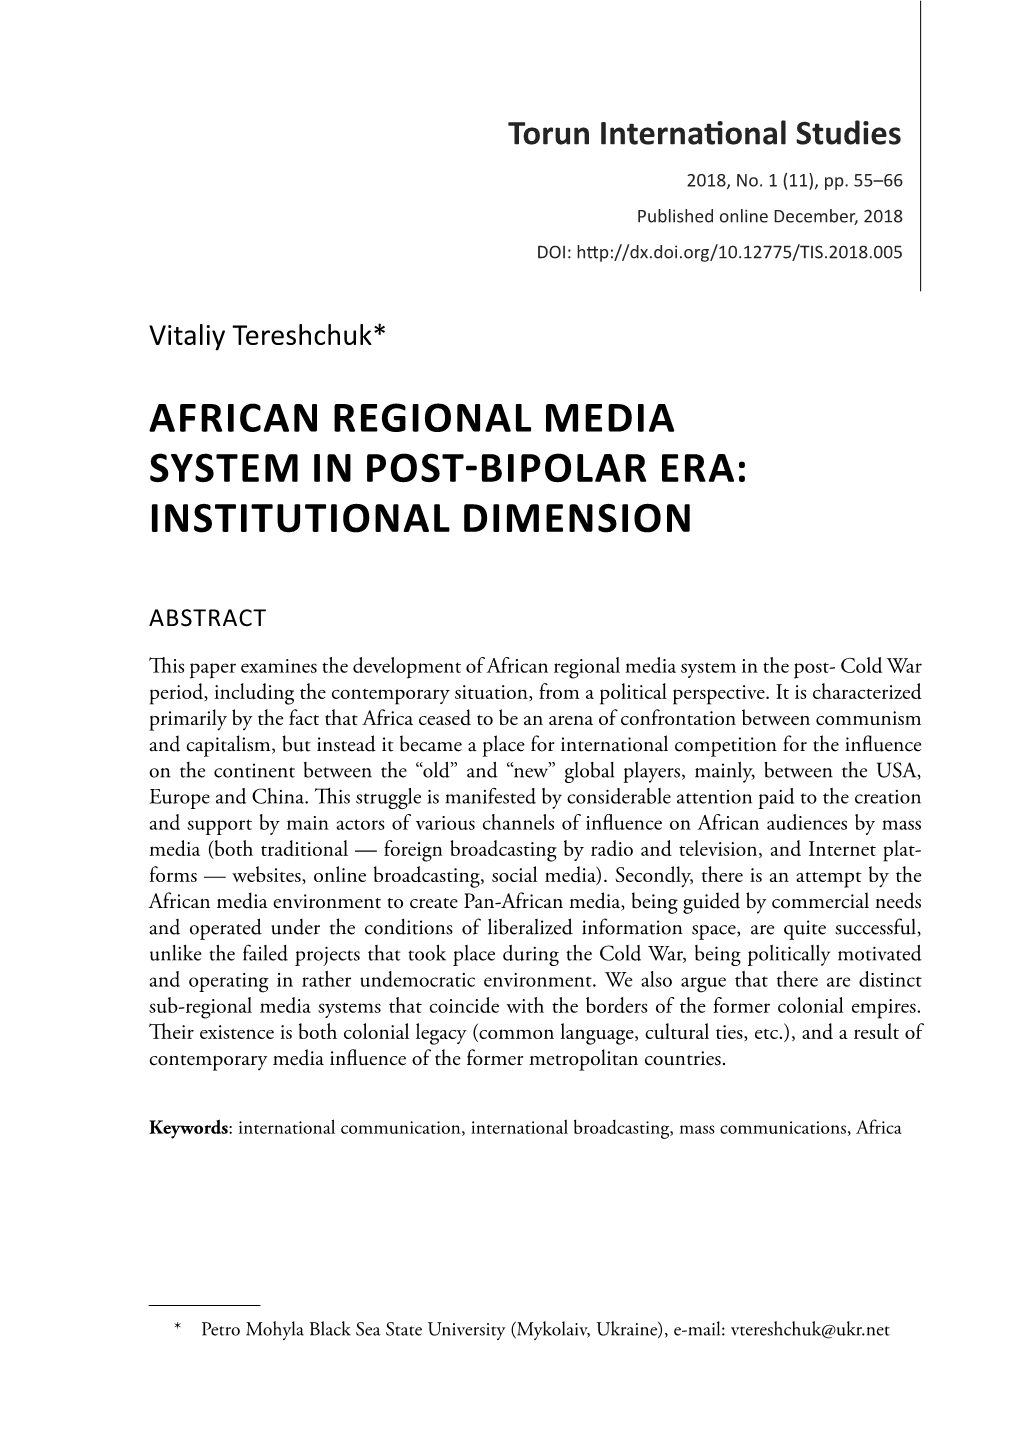 African Regional Media System in Post Bipolar